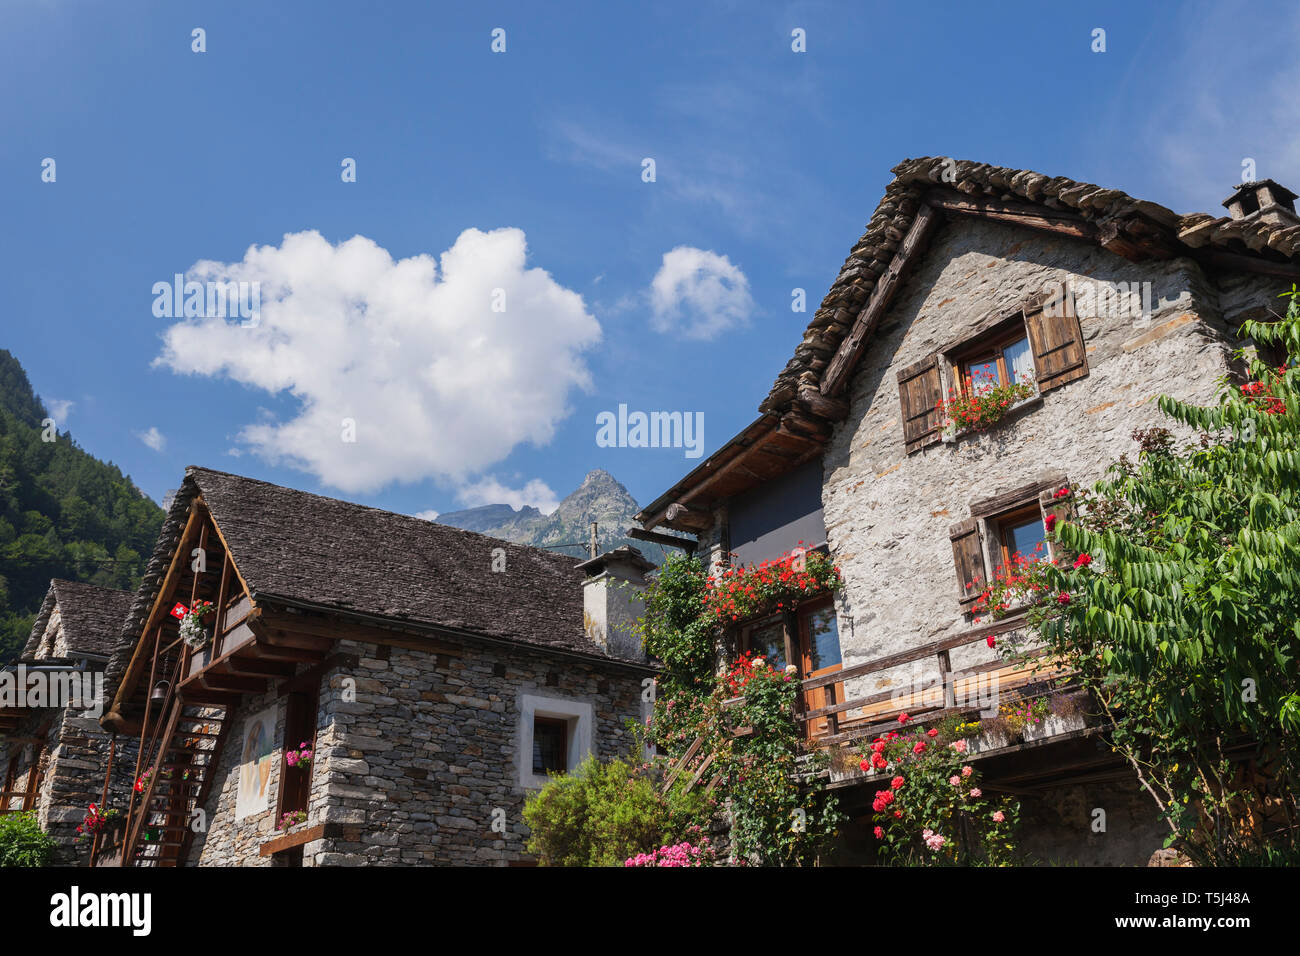 Switzerland, Ticino, Sonogno, typical historic stone houses Stock Photo